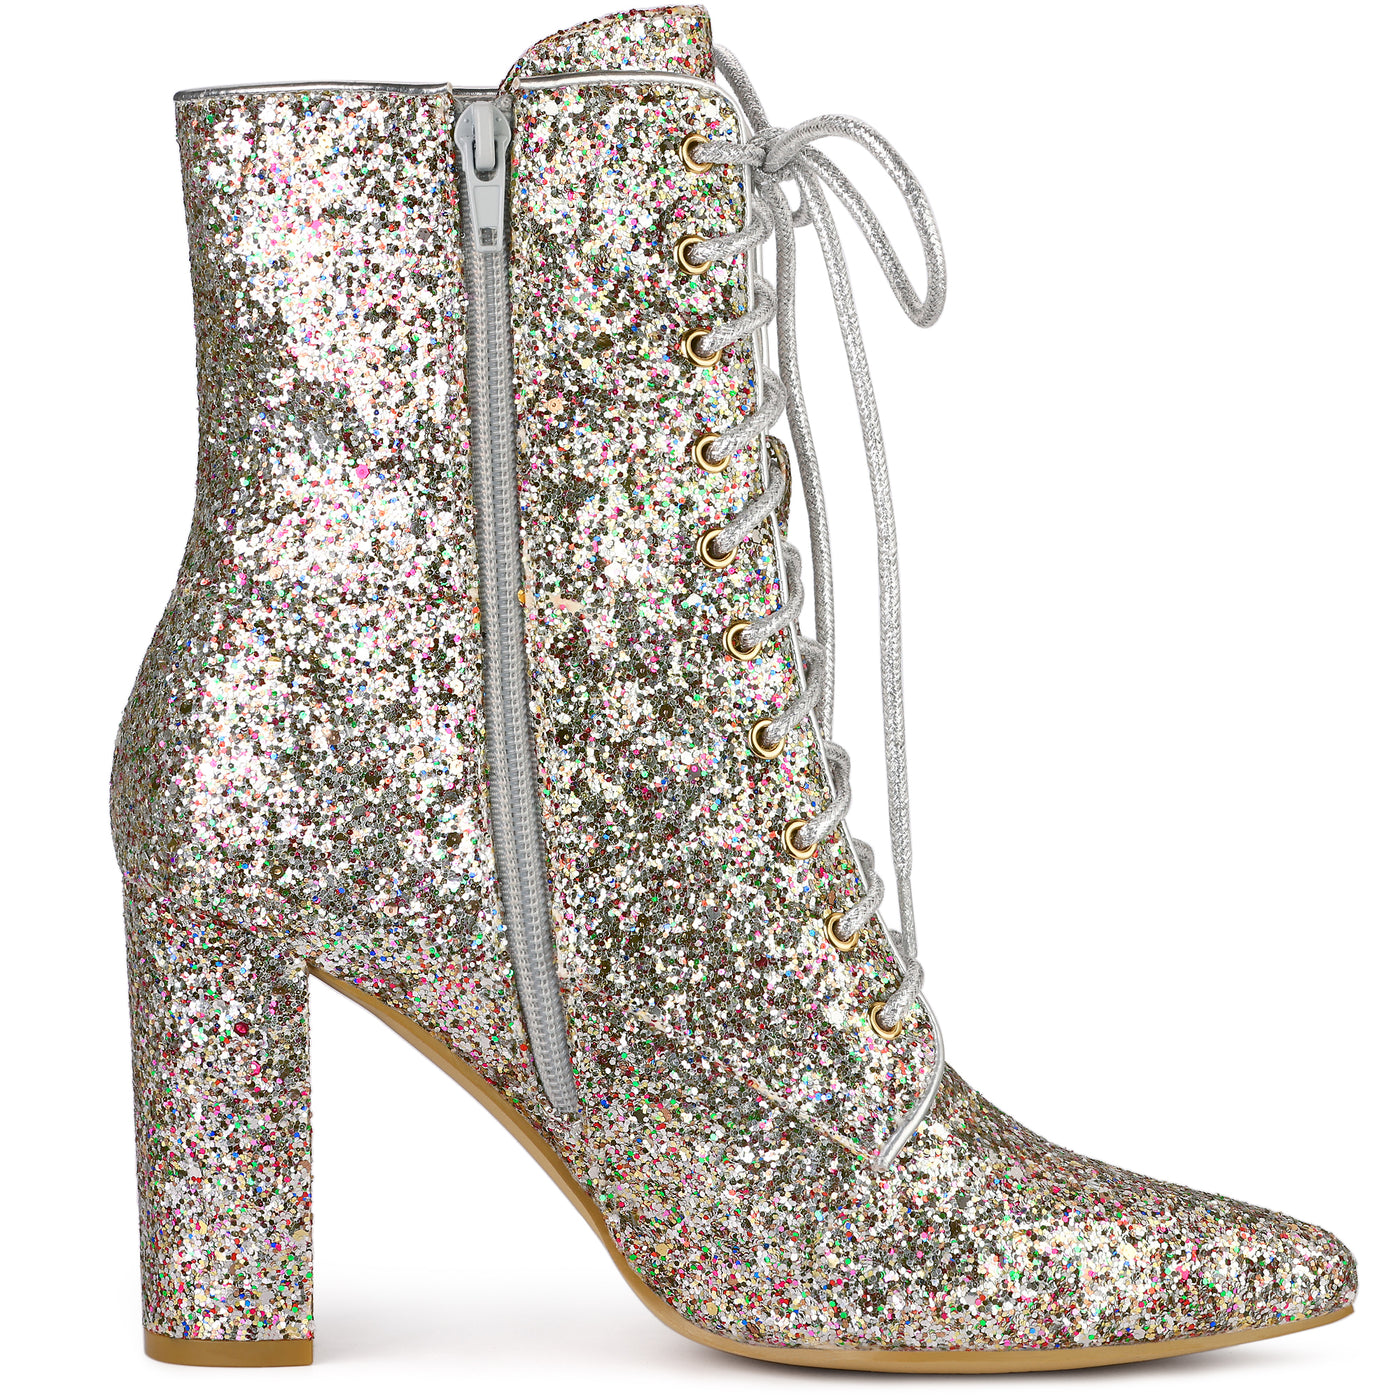 Allegra K Glitter Pointed Toe Block Heel Halloween Ankle Boots